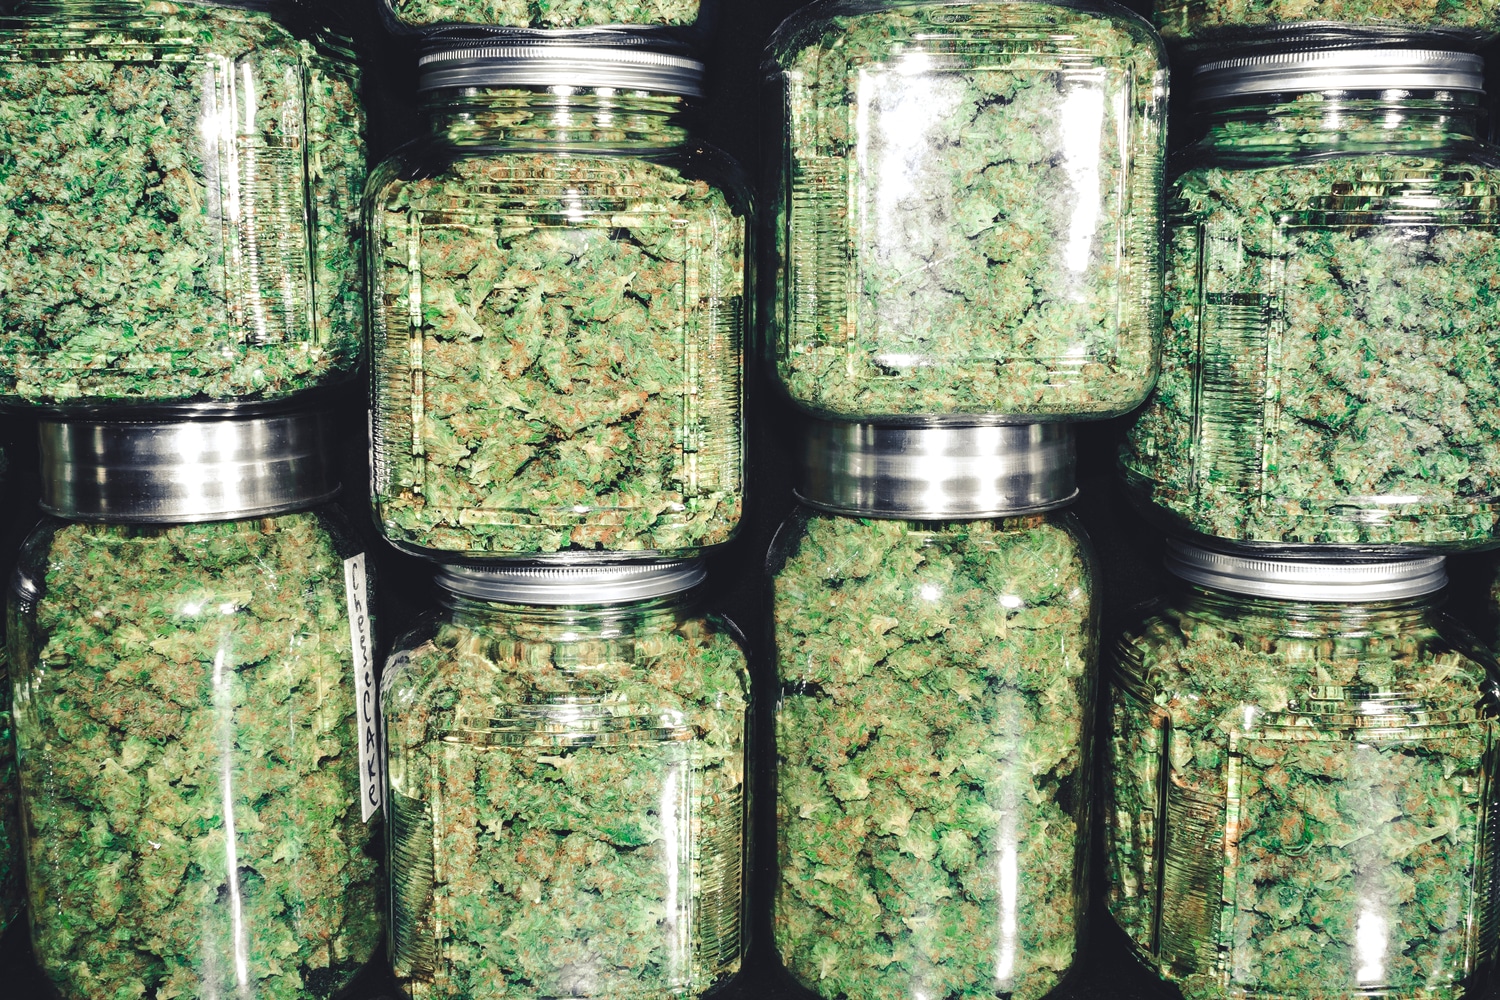 Different Cannabis Strains in Jars